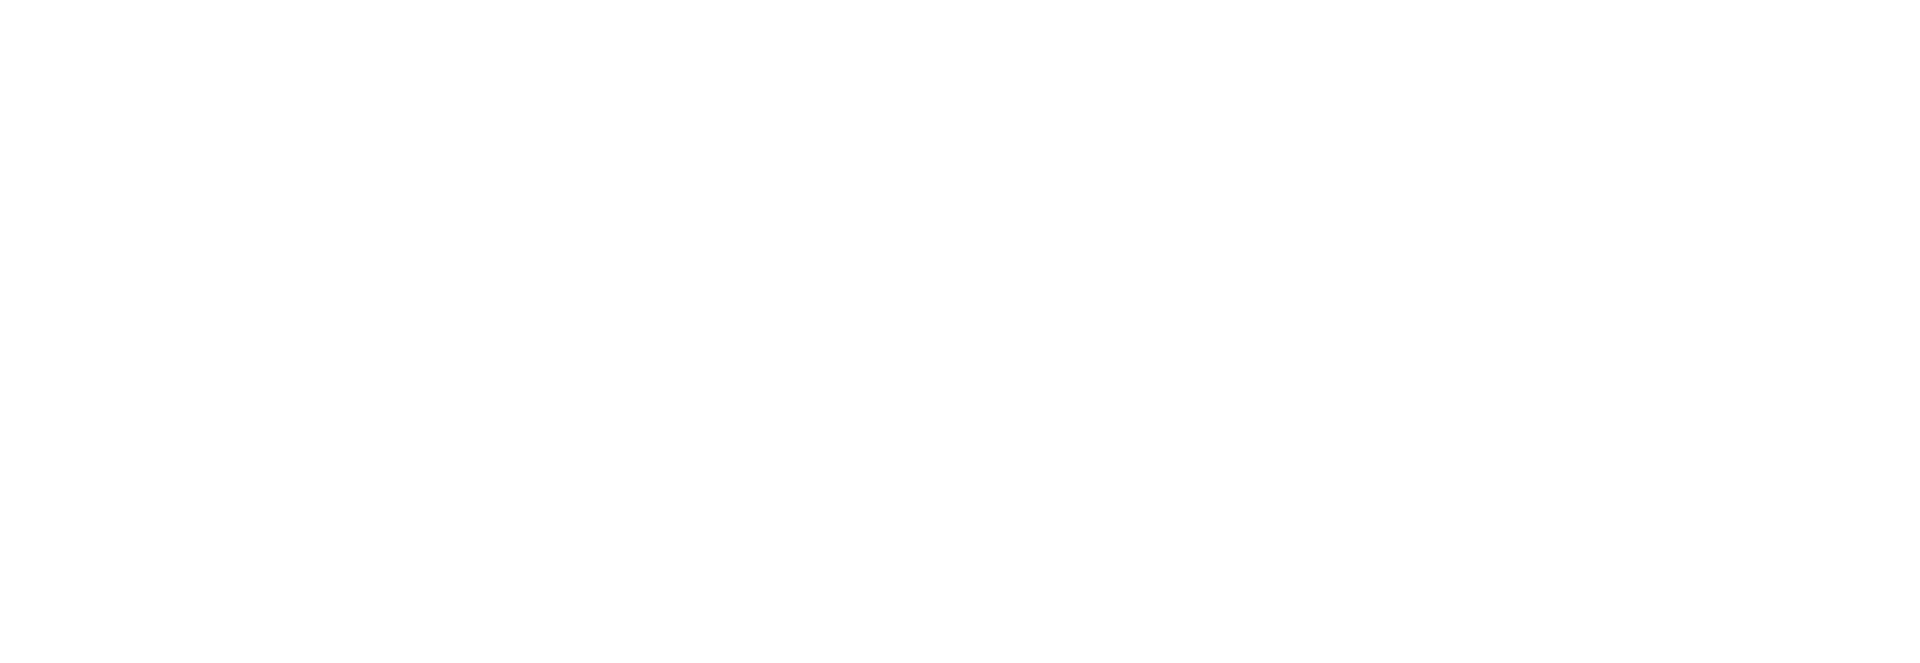 Texas-Nationalist-Movement-full-logo-rebuild-white-transparent-1